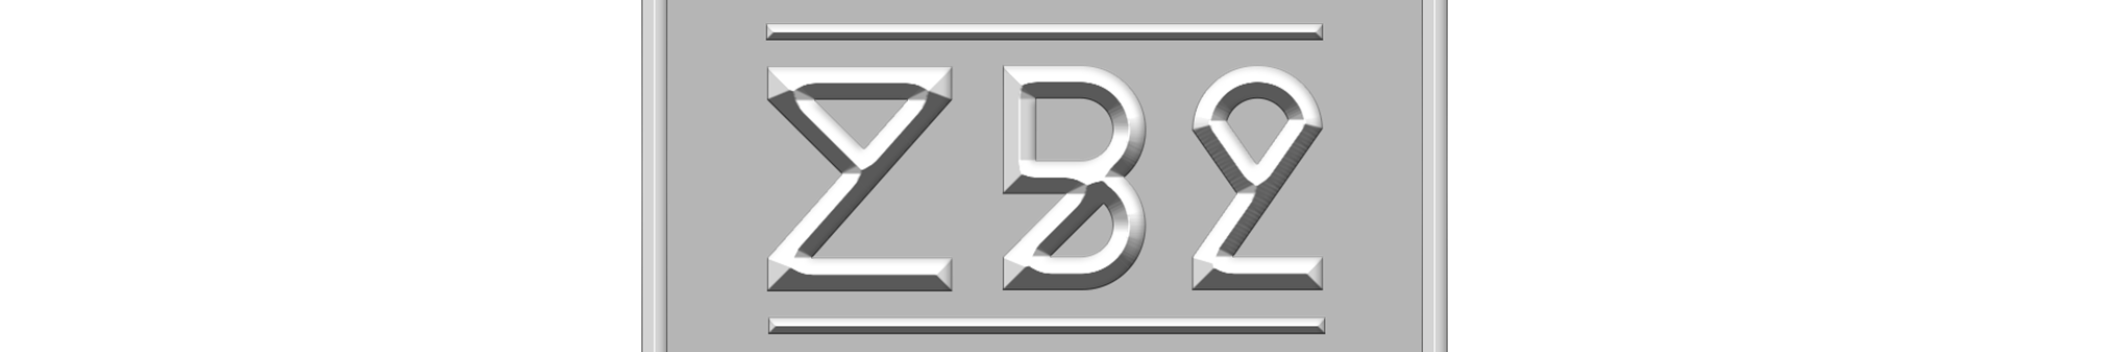 ZB2